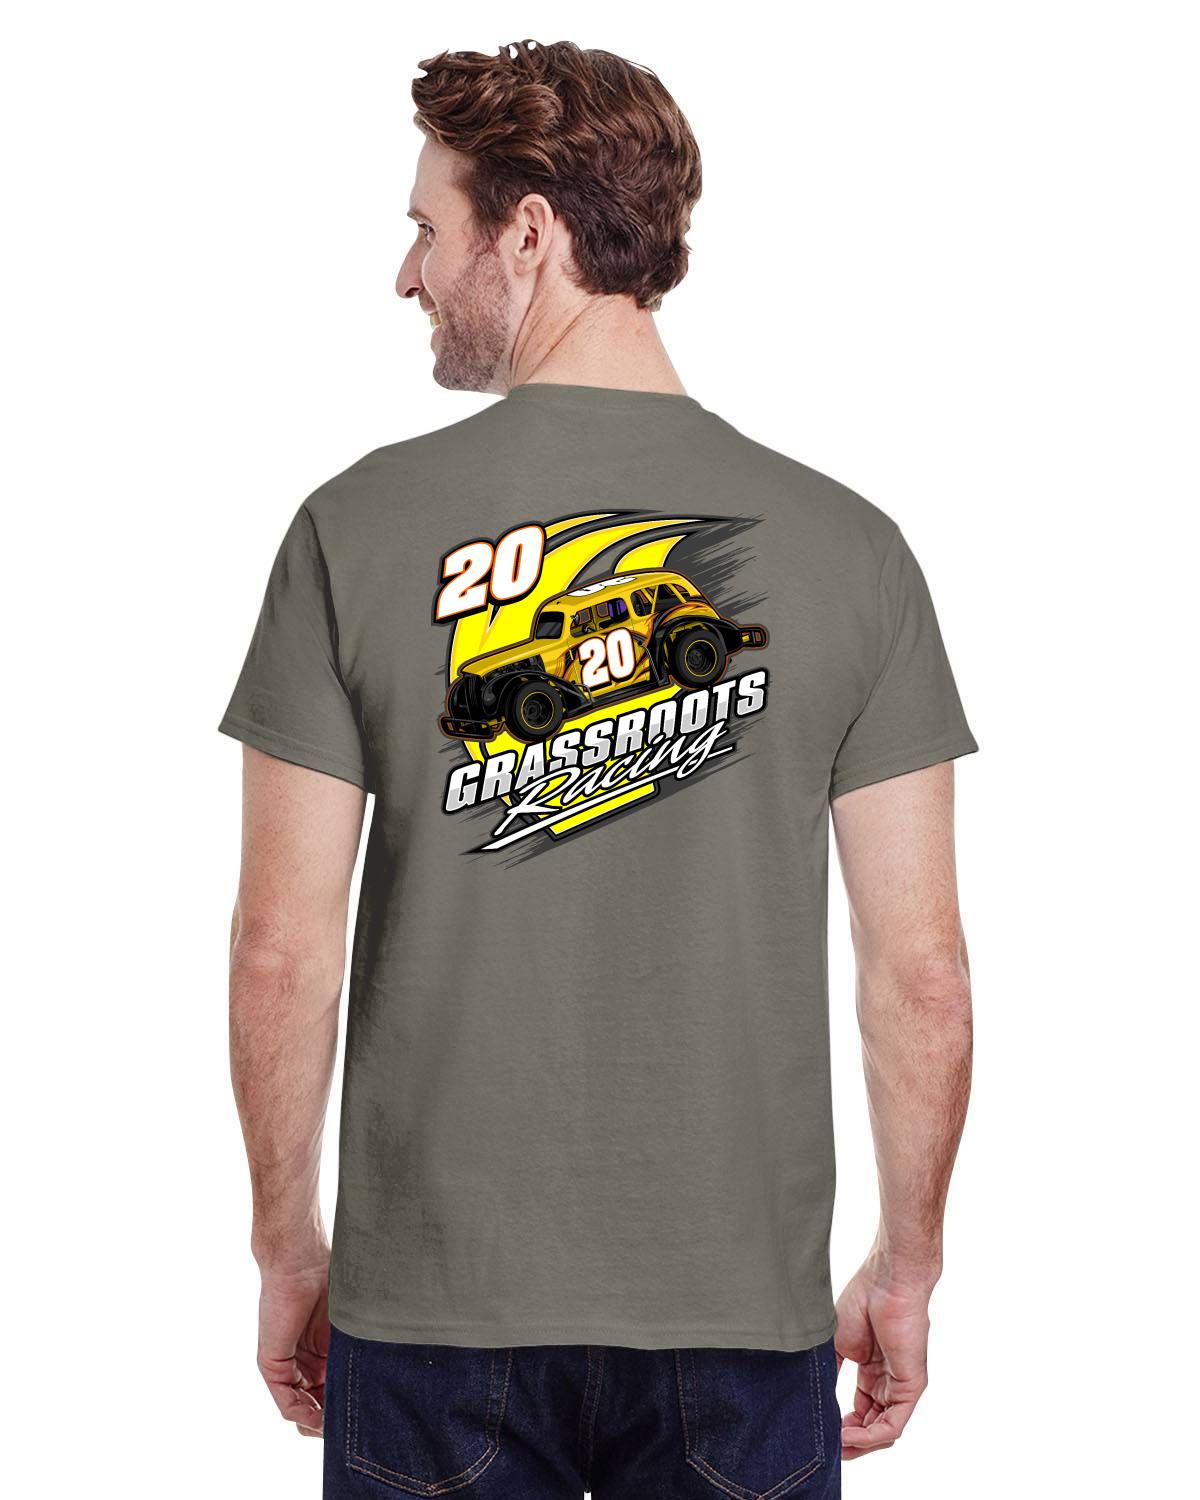 Cole McFadden / Grassroots Racing Men's tshirts